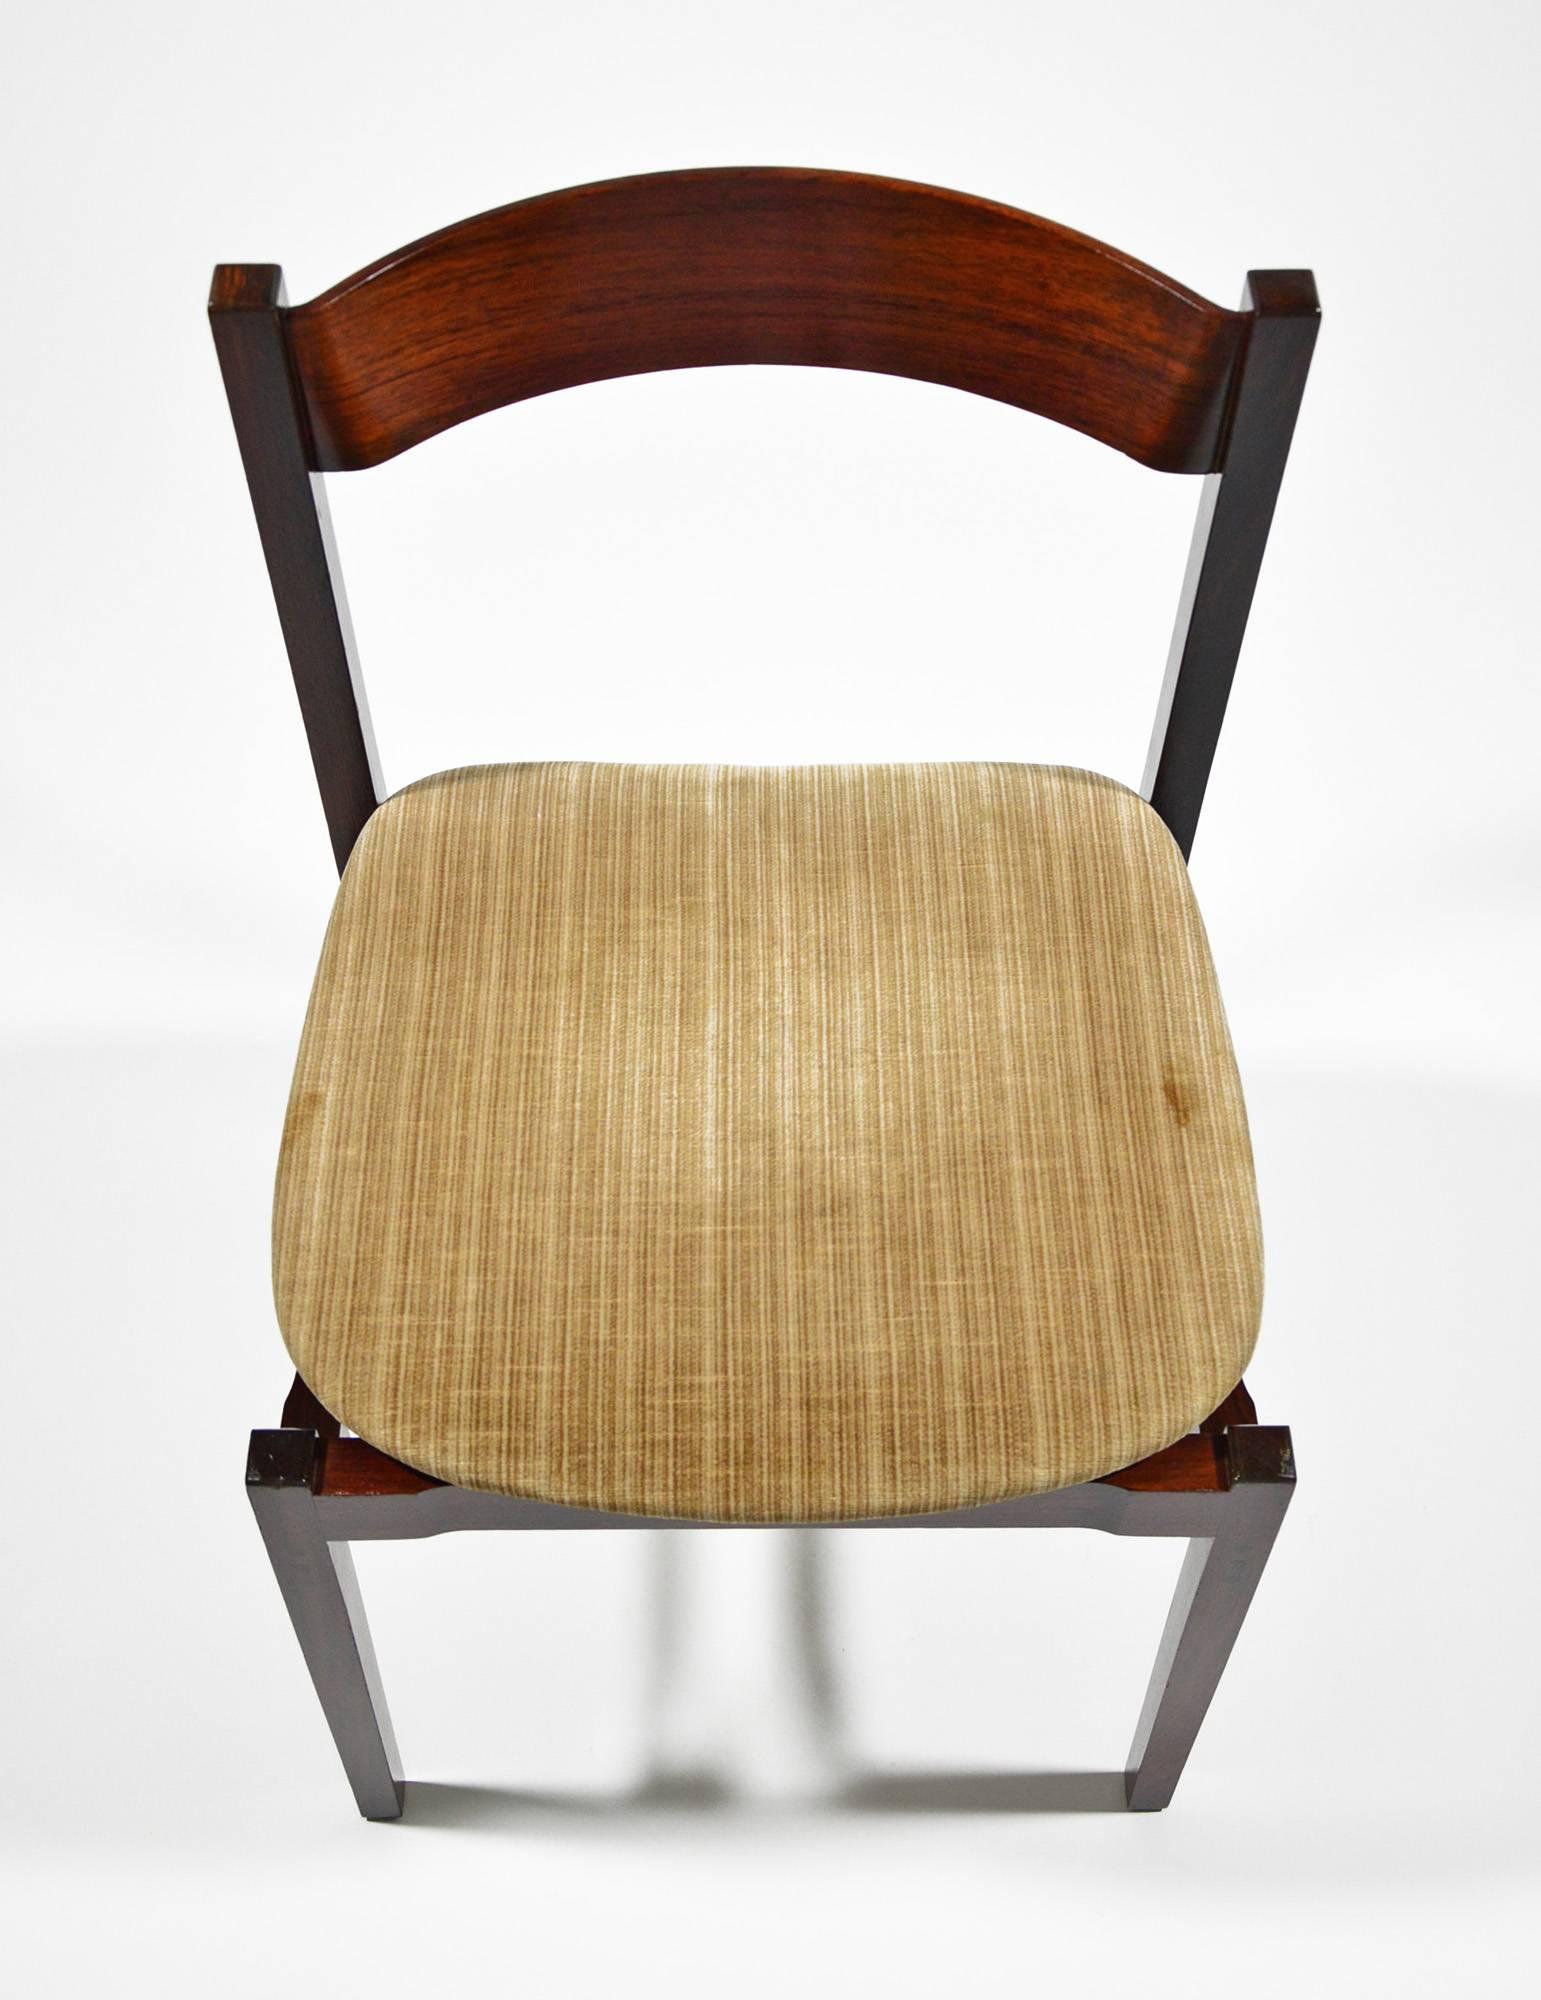 Velvet Six Gianfranco Frattini Rosewood Chairs Mod. 101 for Cassina, 1959